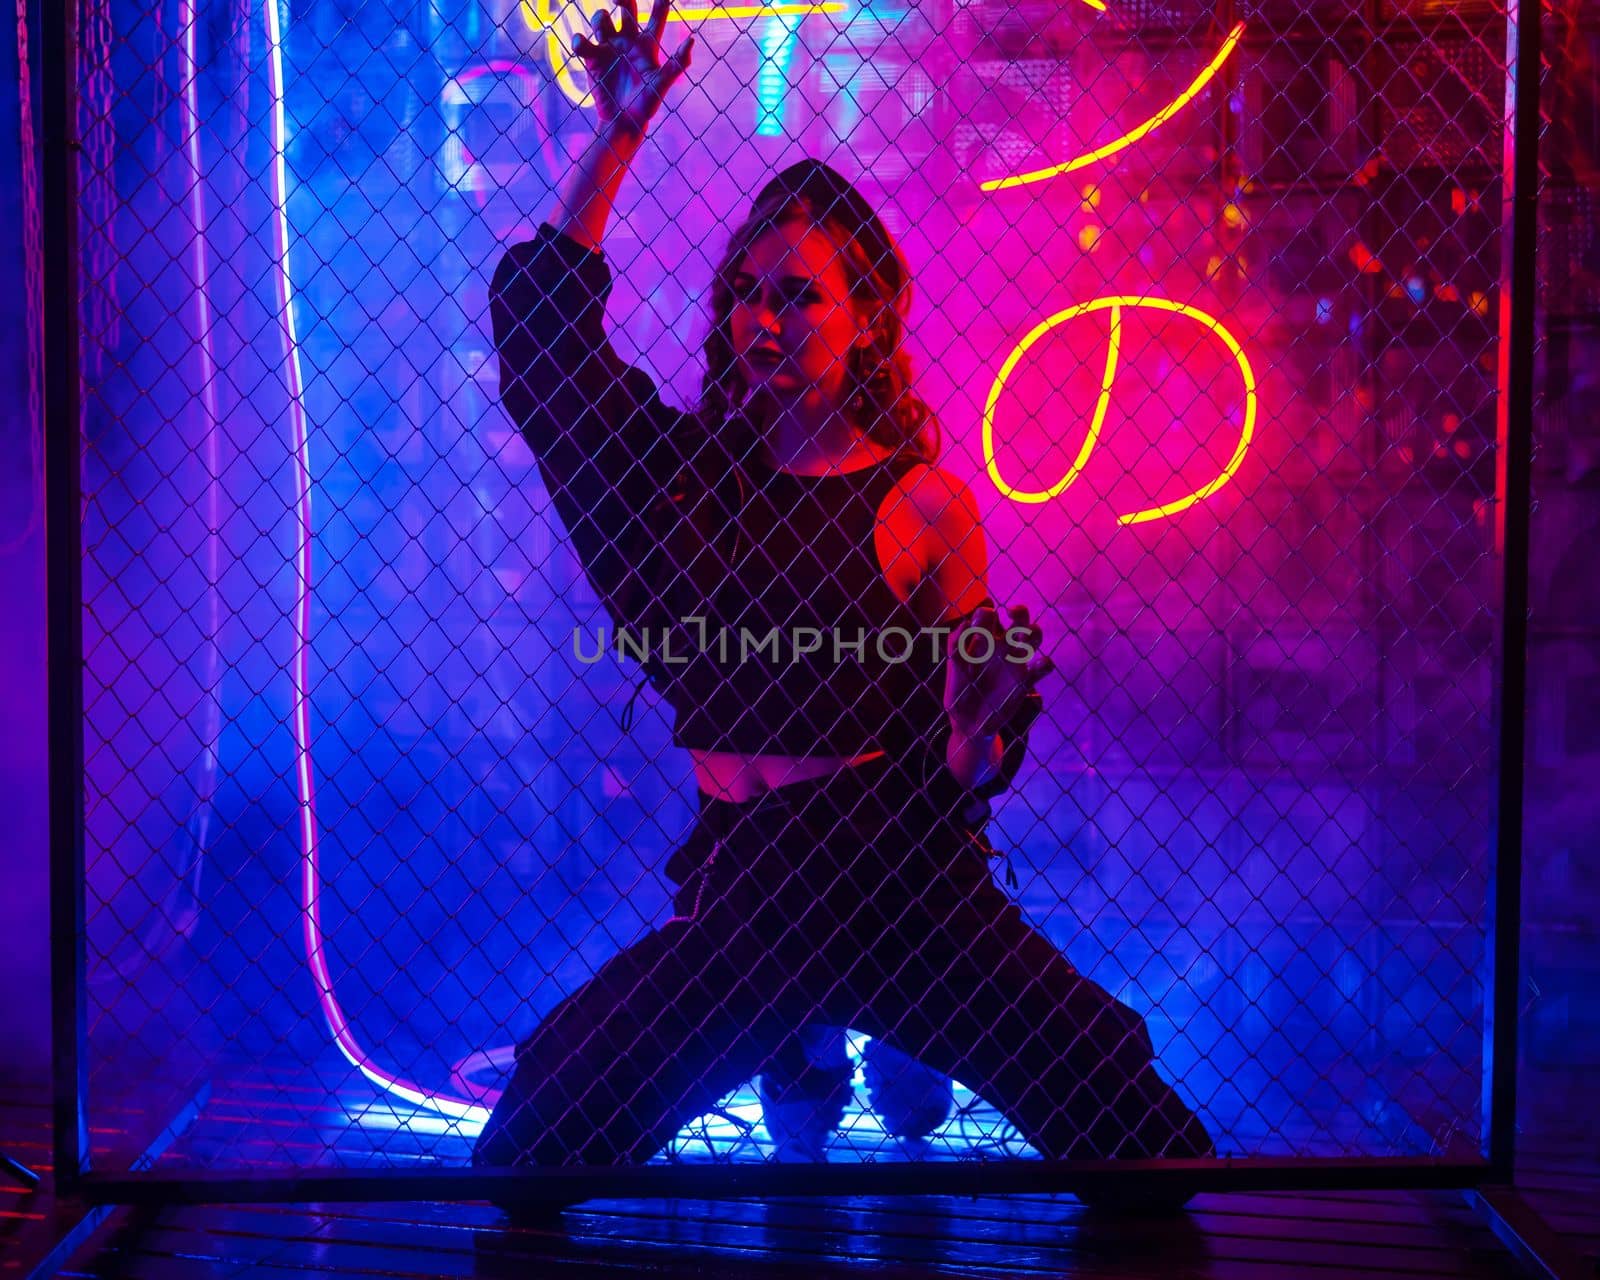 Caucasian woman in neon studio behind chain-link mesh